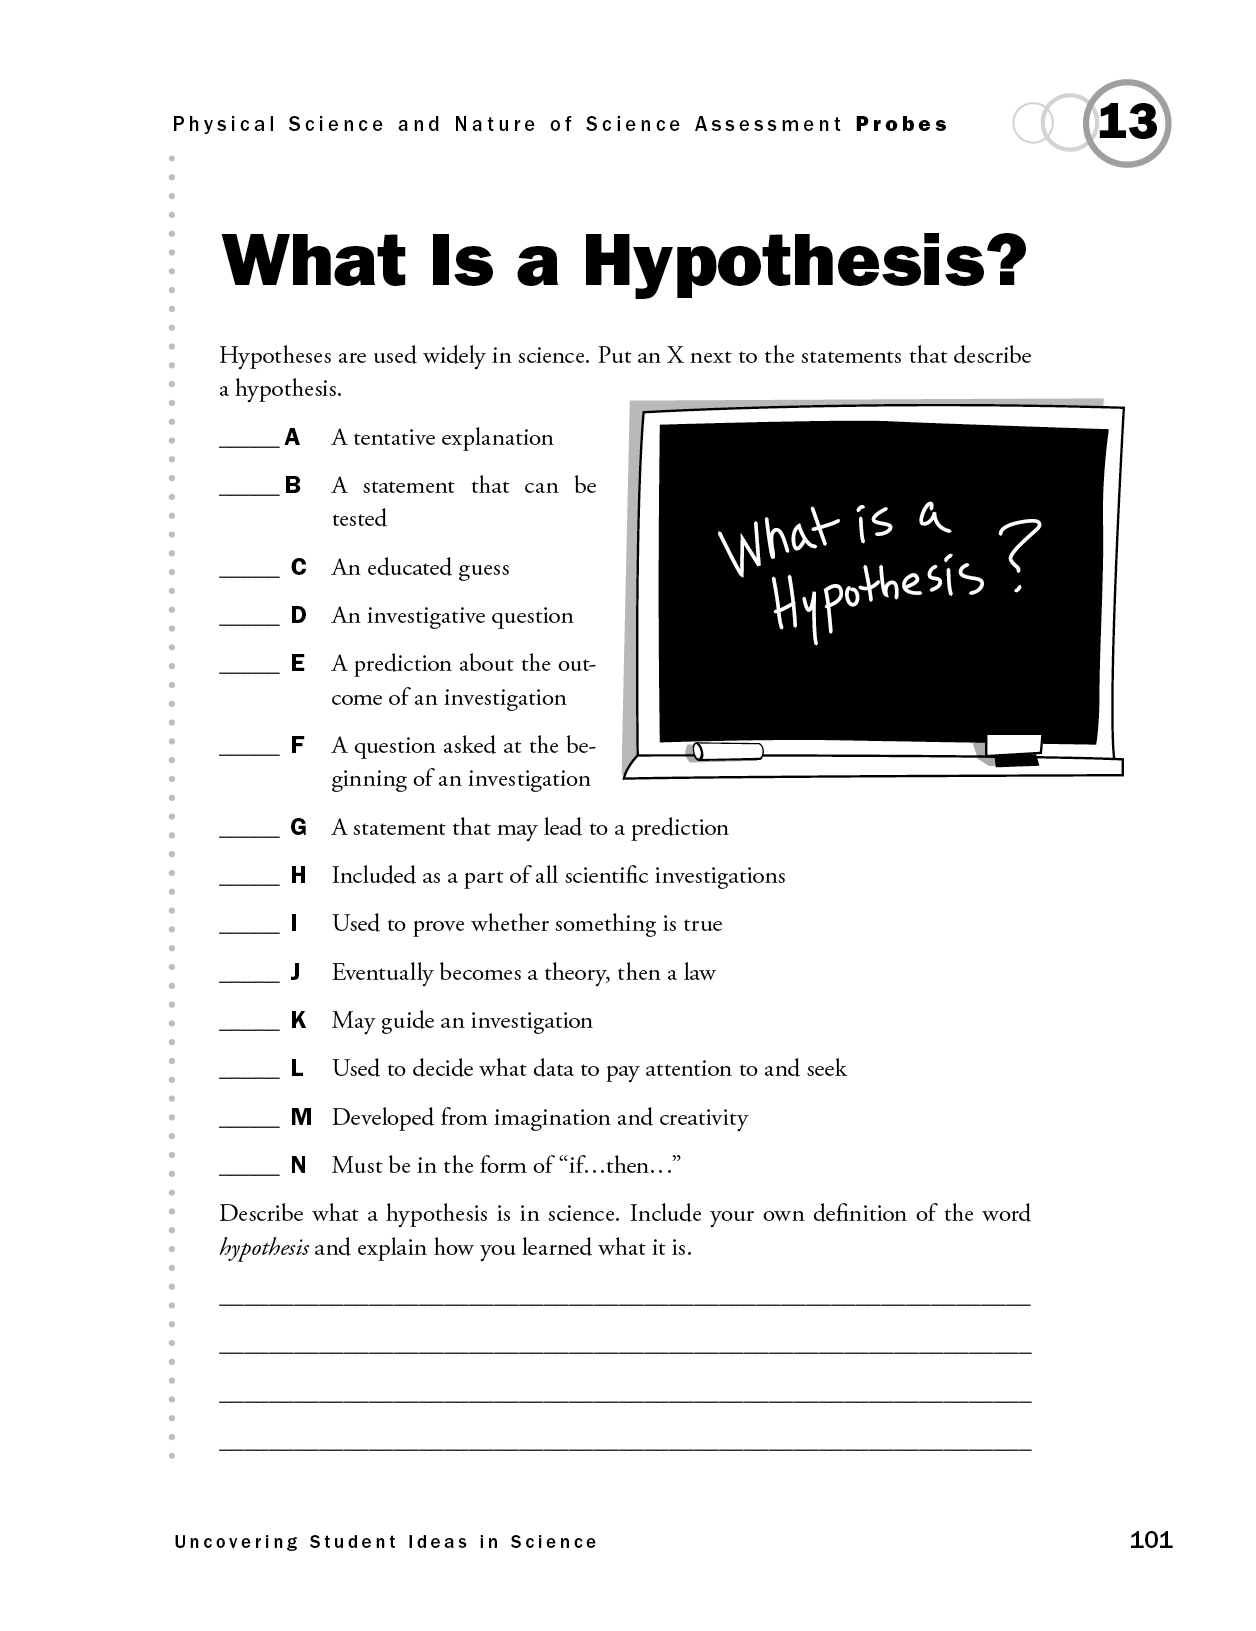 hypothesis practice pdf